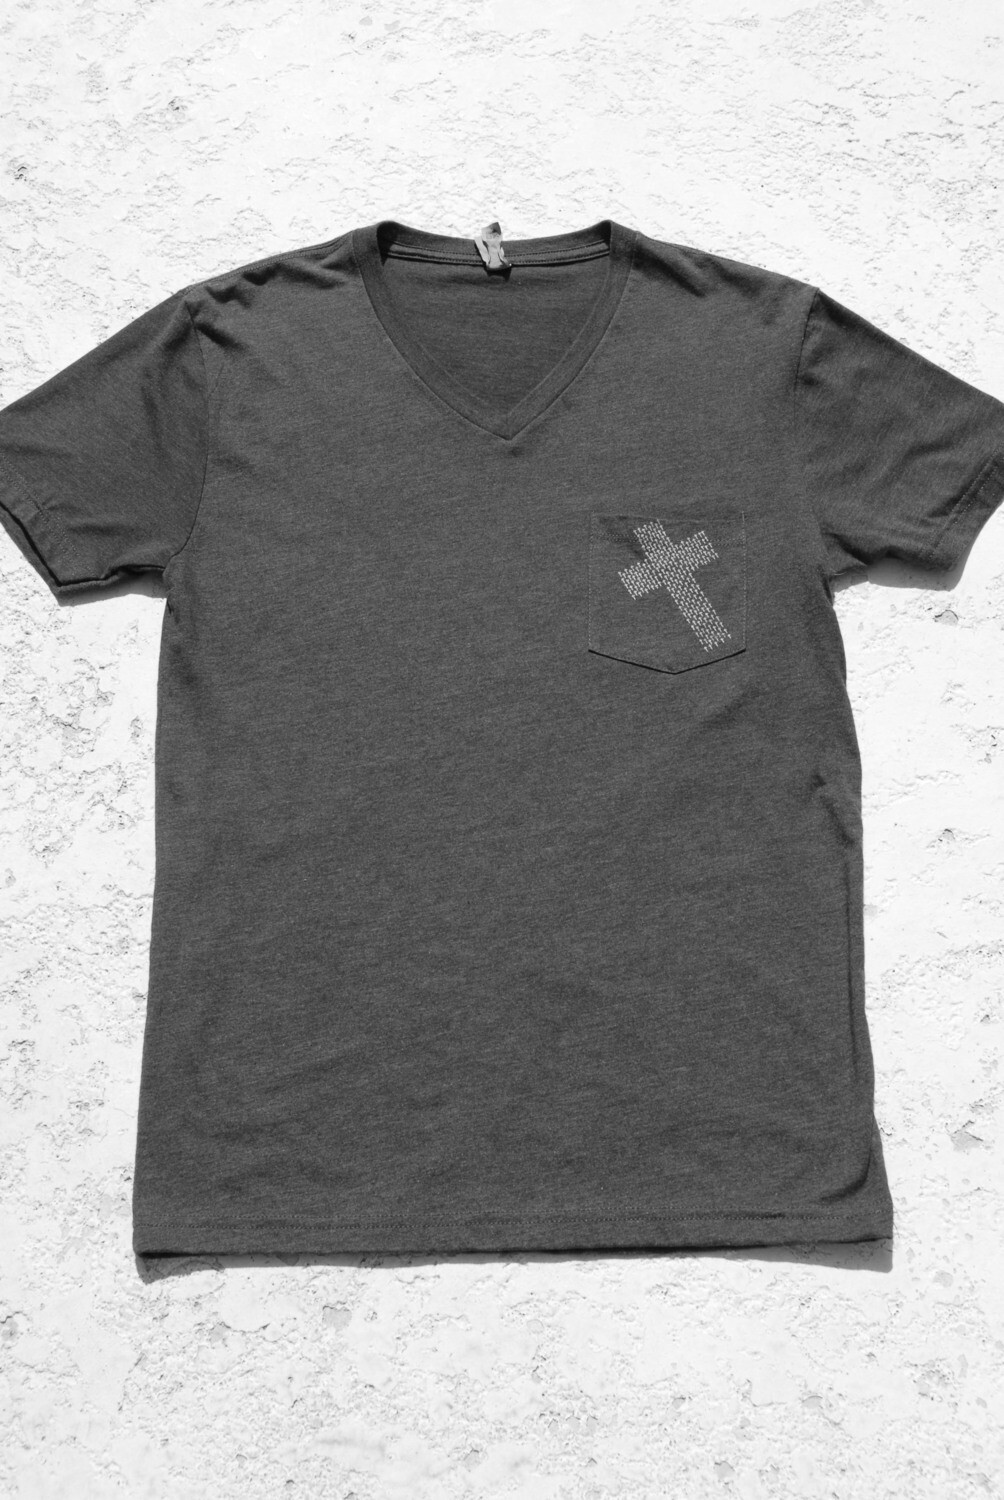 Men's t shirt v neck in dark grey with black cross art, size: xxlarge